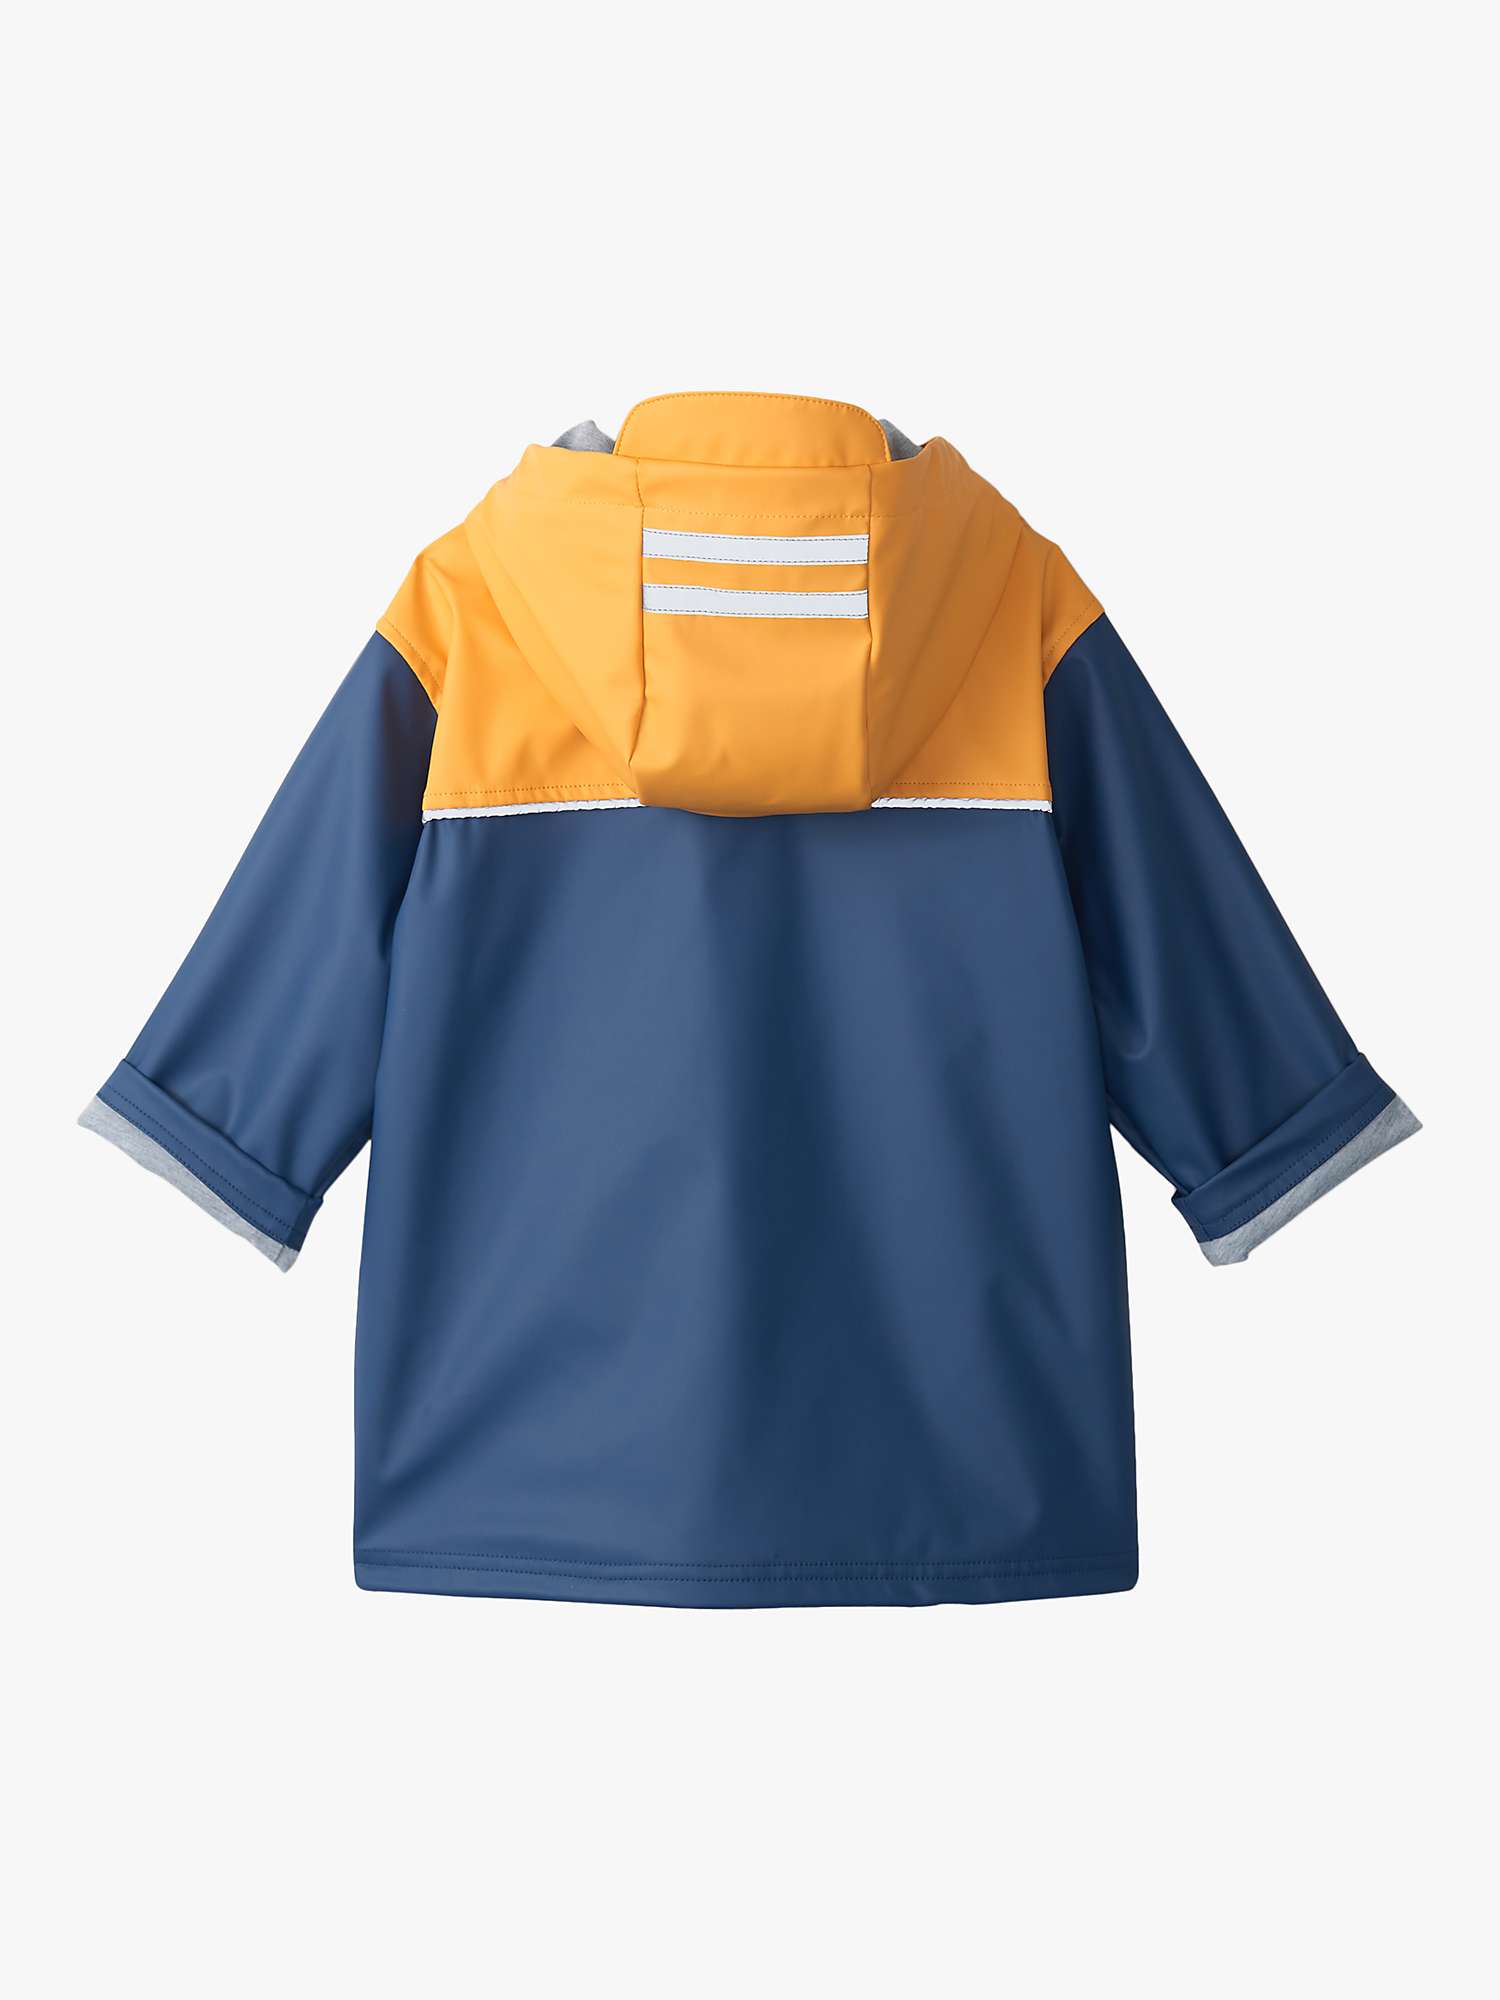 Buy Hatley Kids' Mariner Colour Block Zip Up Hooded Rain Jacket, Yellow/Blue Online at johnlewis.com